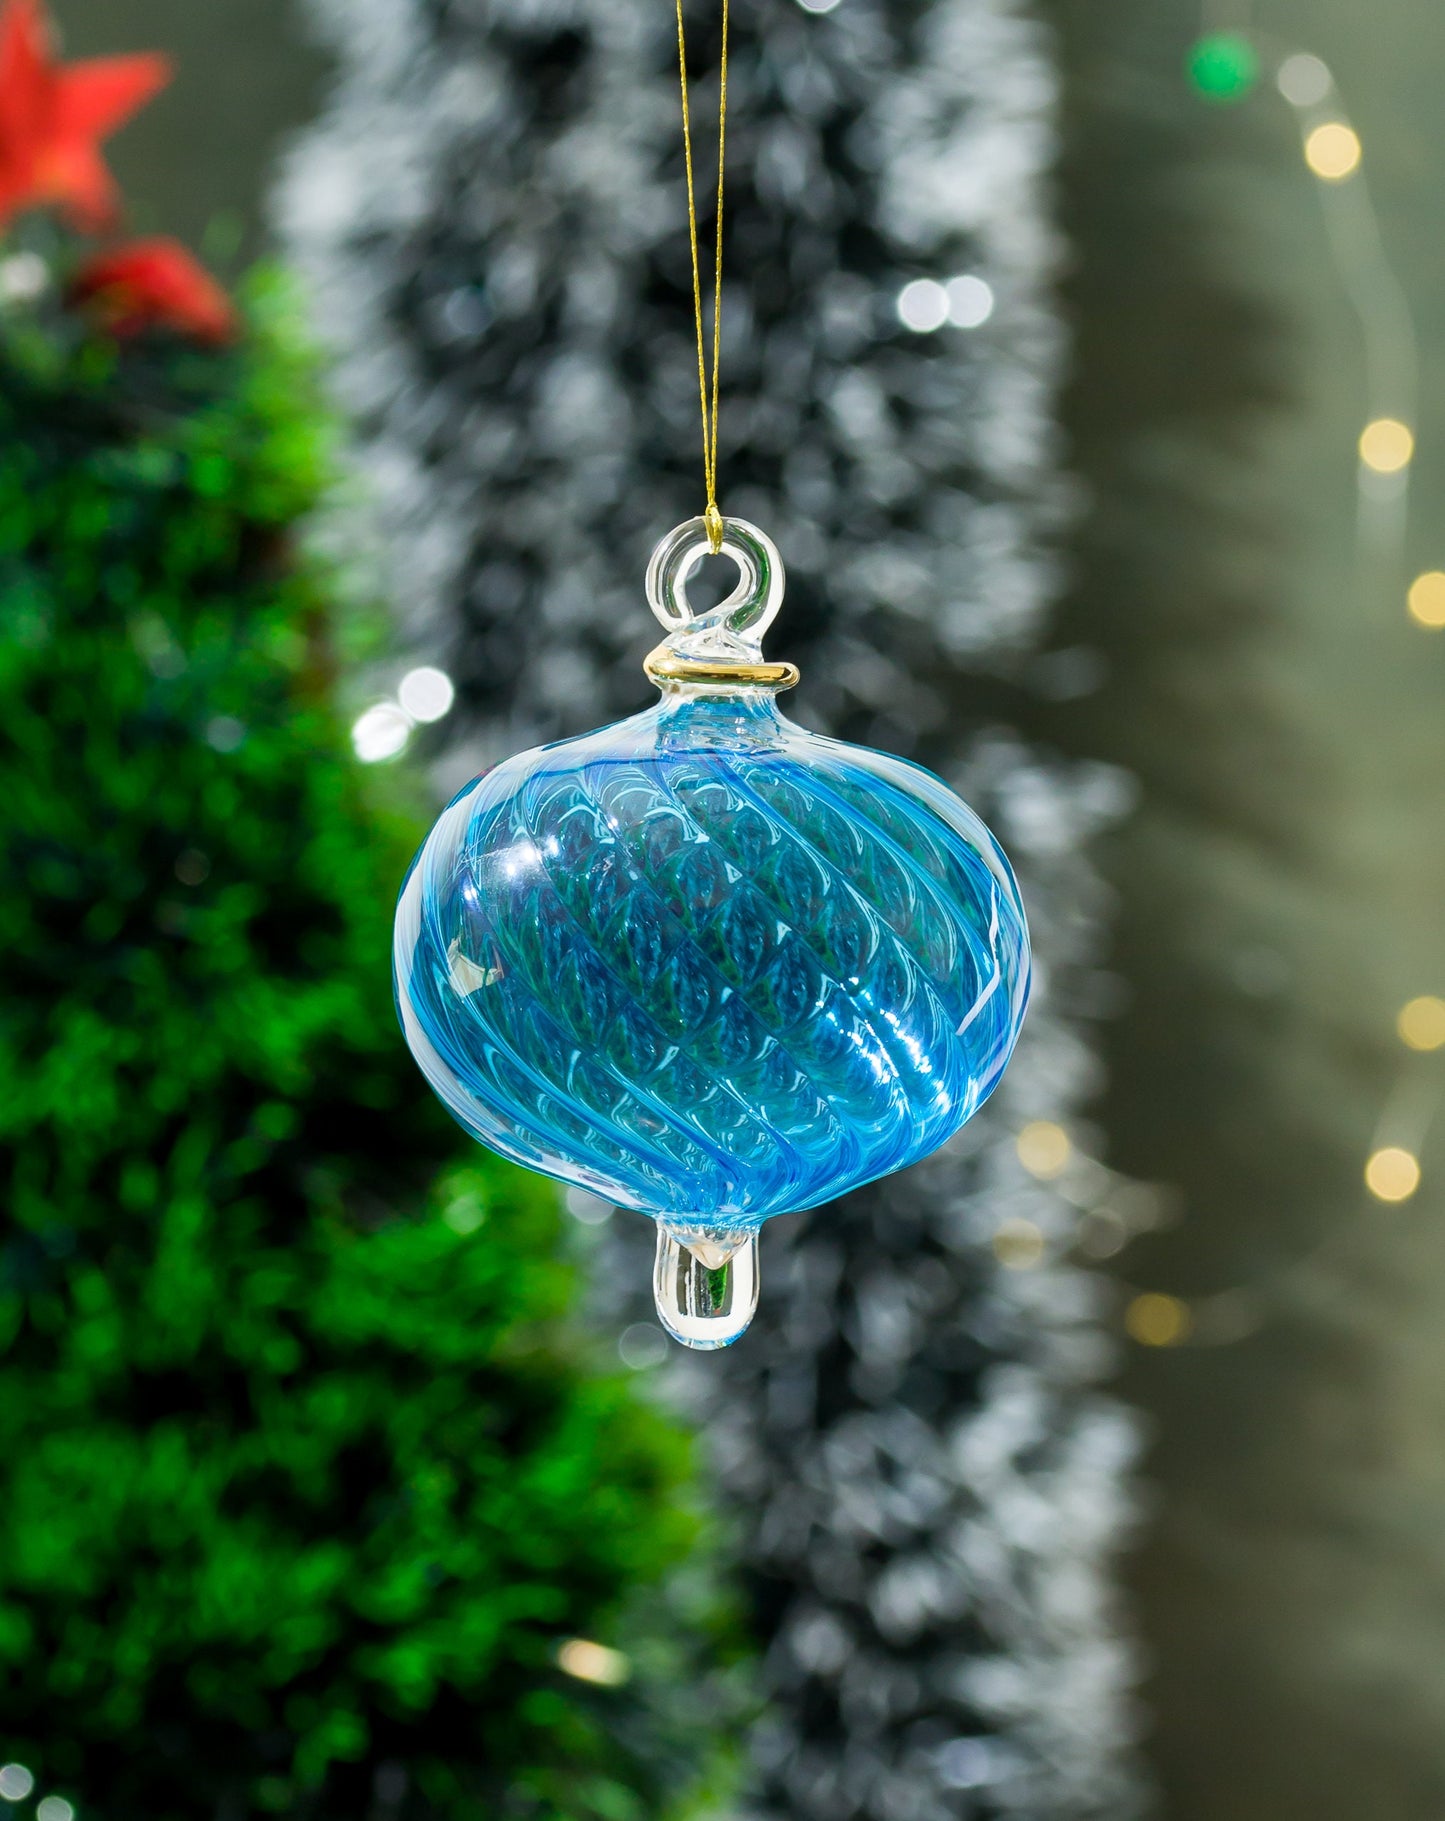 Les Trois Pyramides decorative balls for Christmas tree decorations